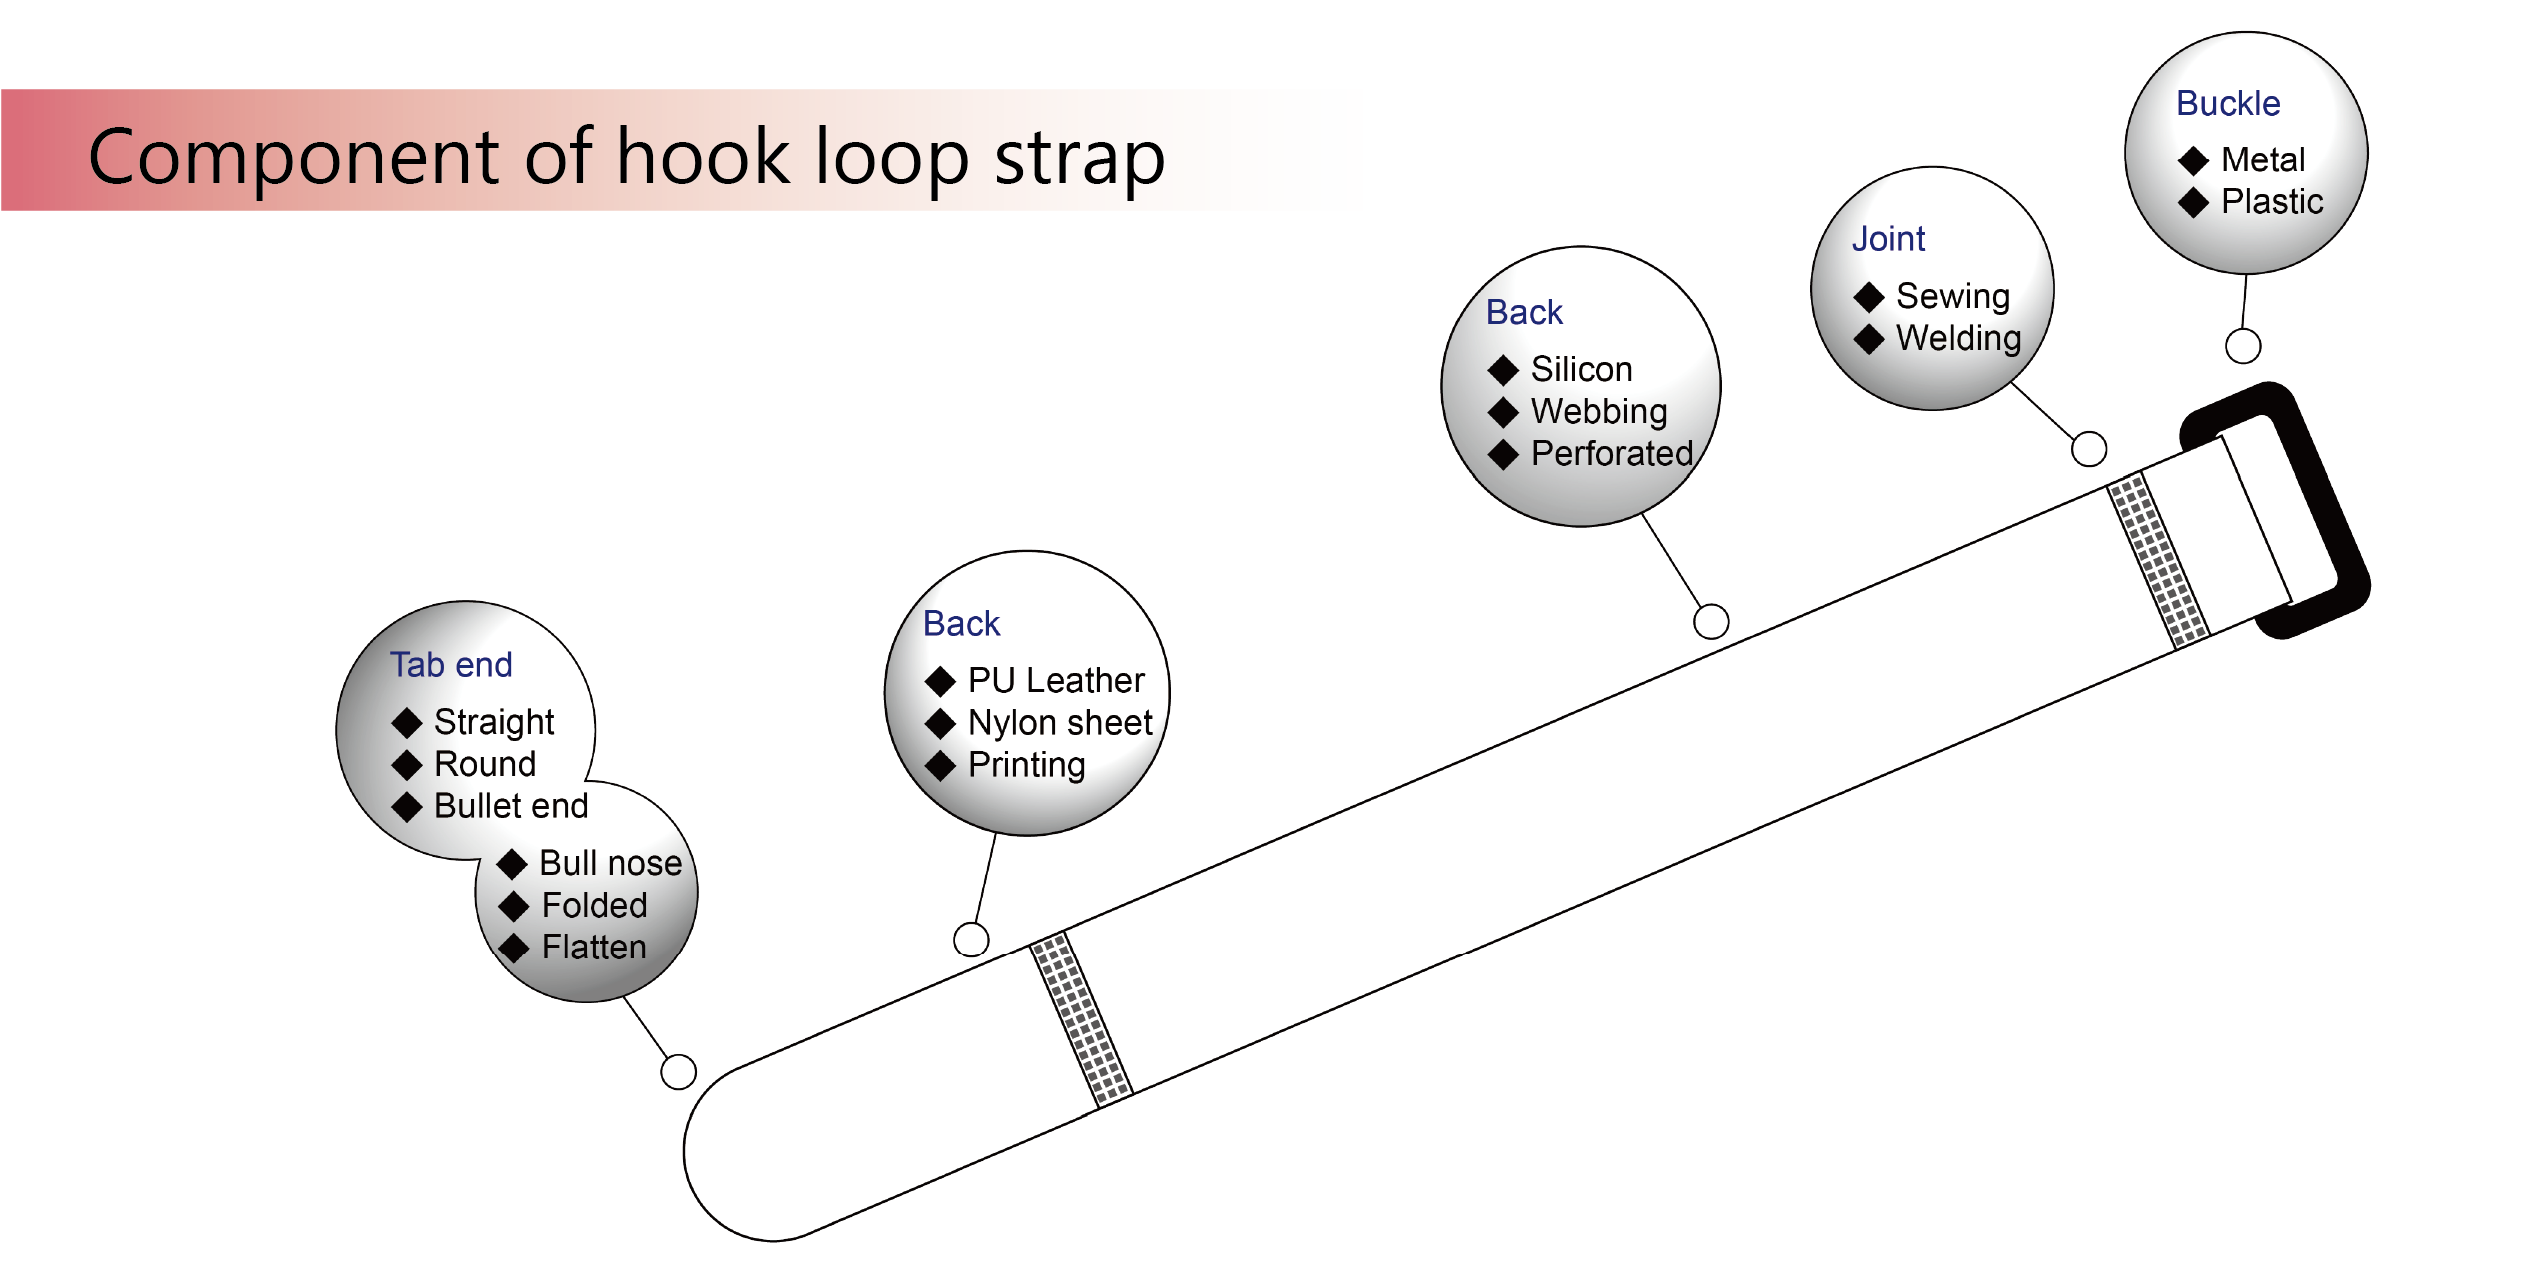 Komponen dari tali pengikat loop hook